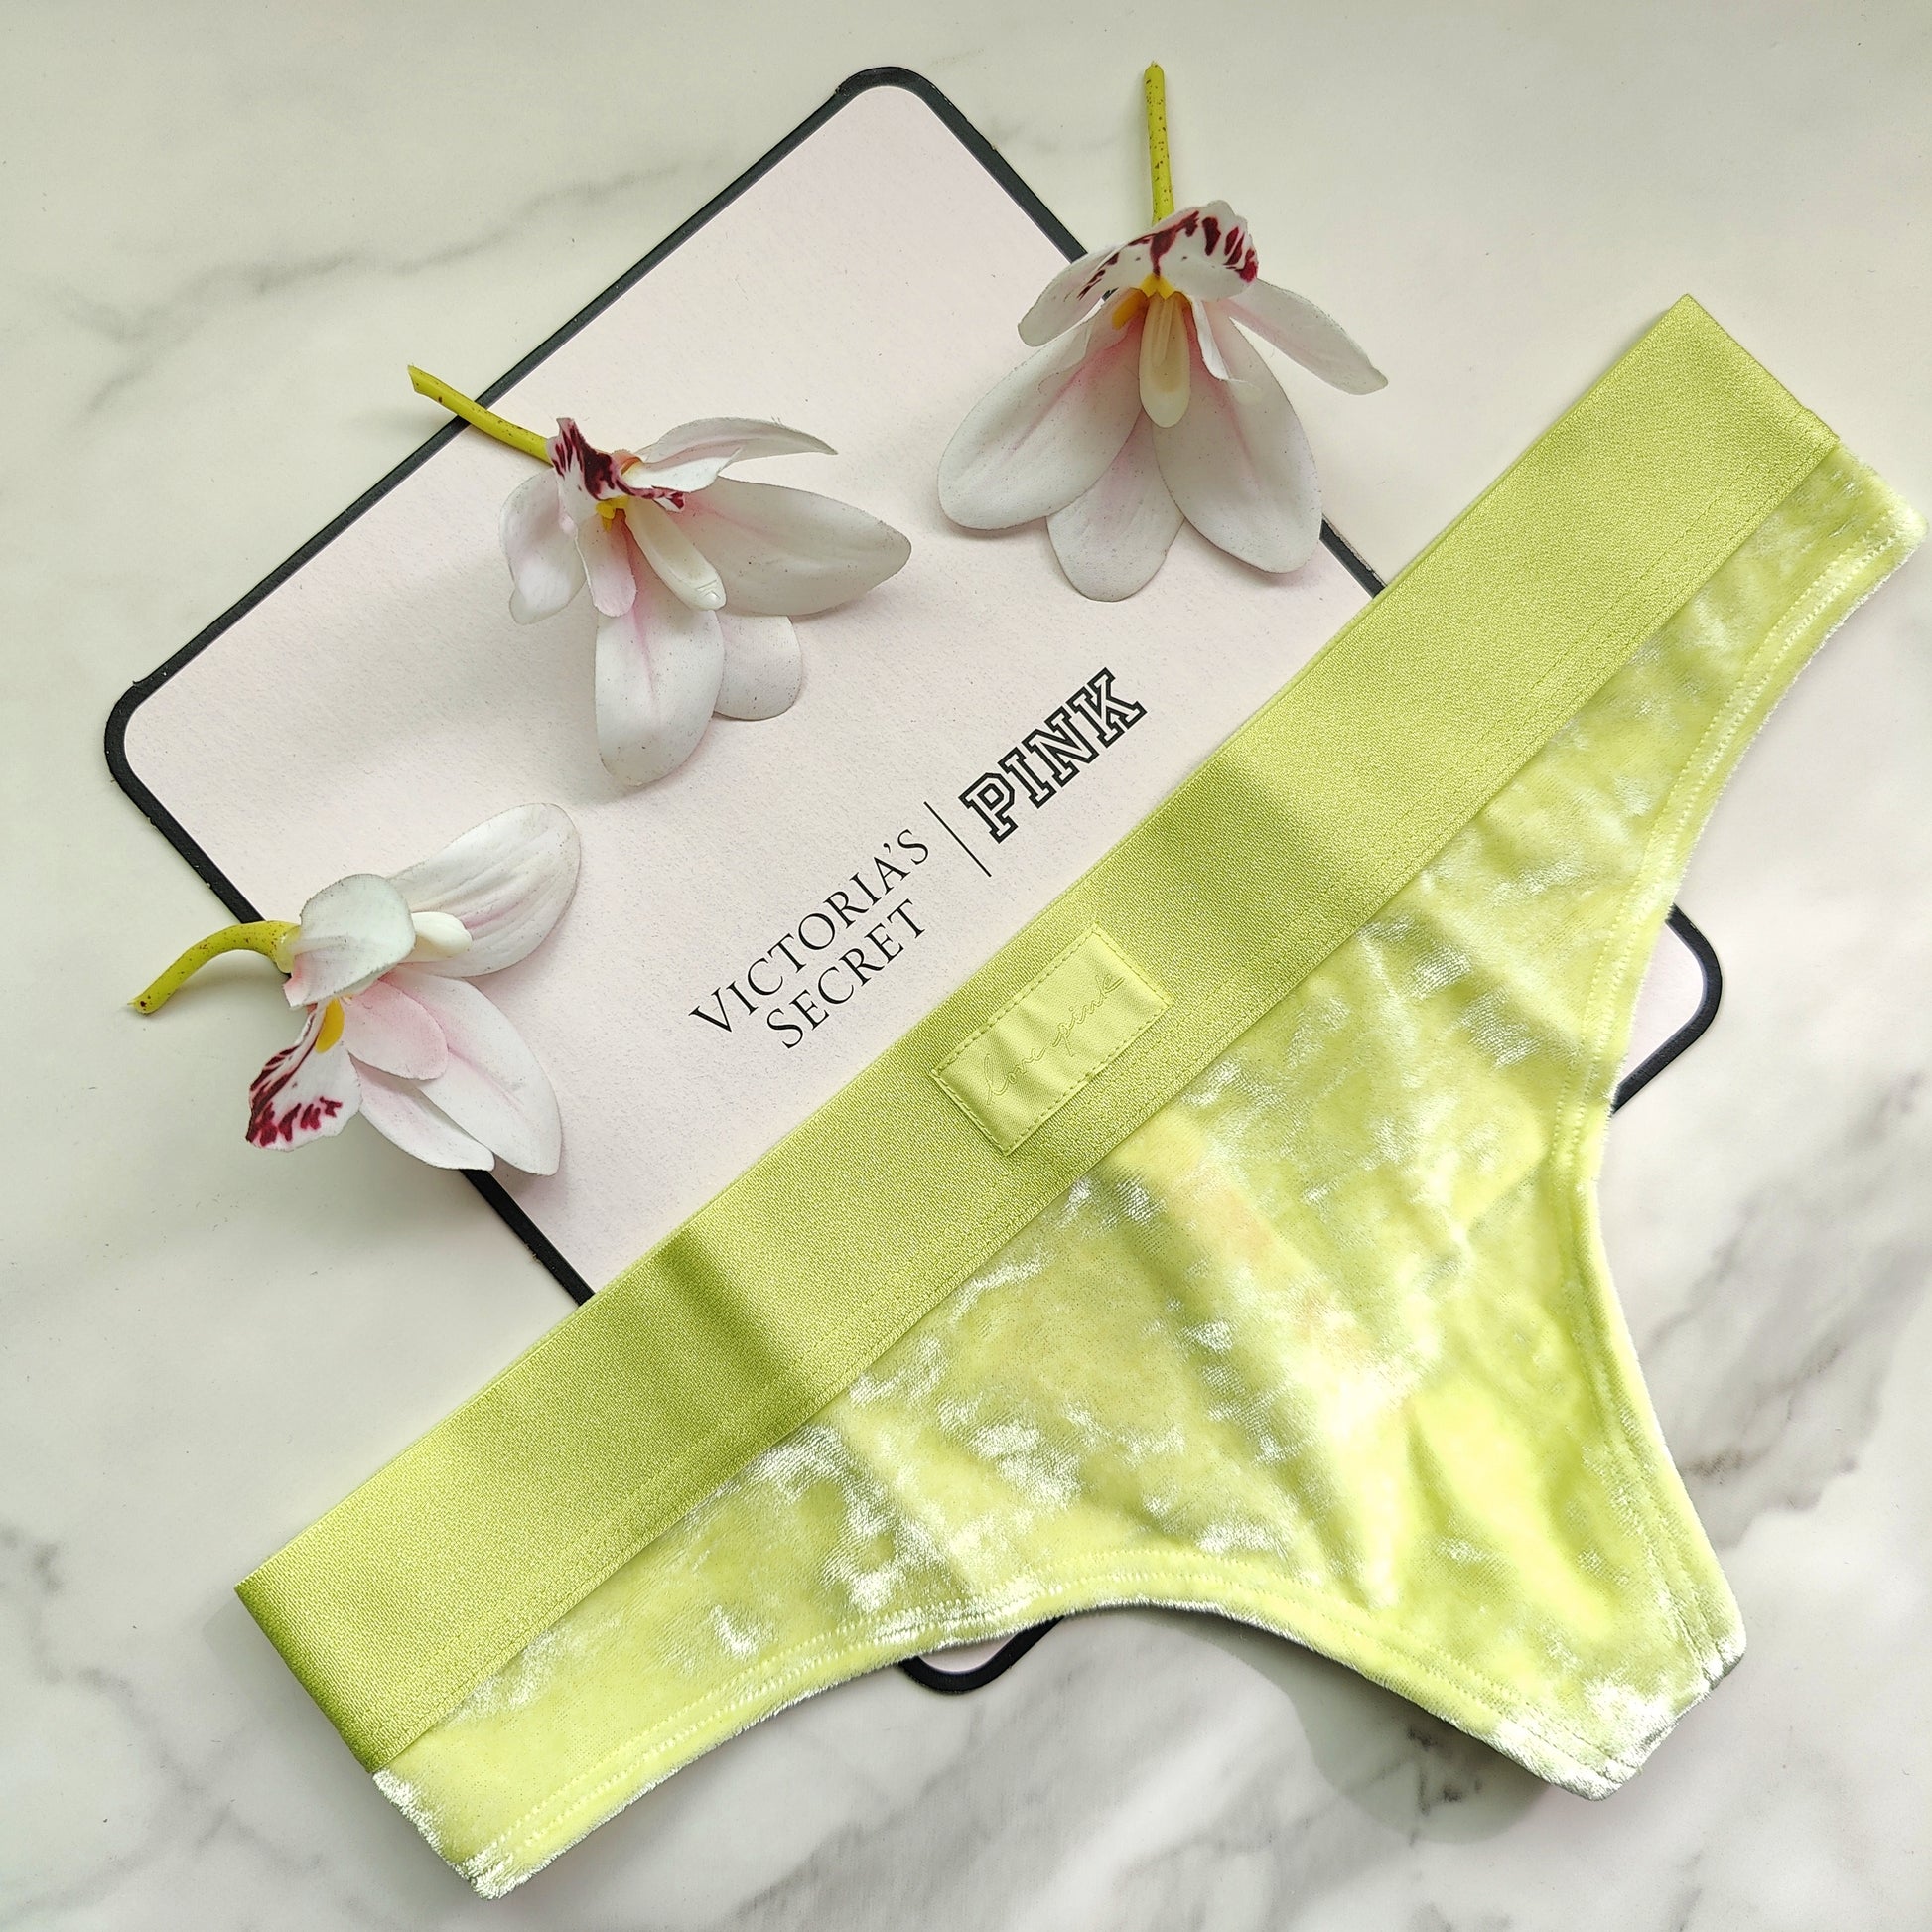 Victoria's Secret PINK Velvet Thong Panty